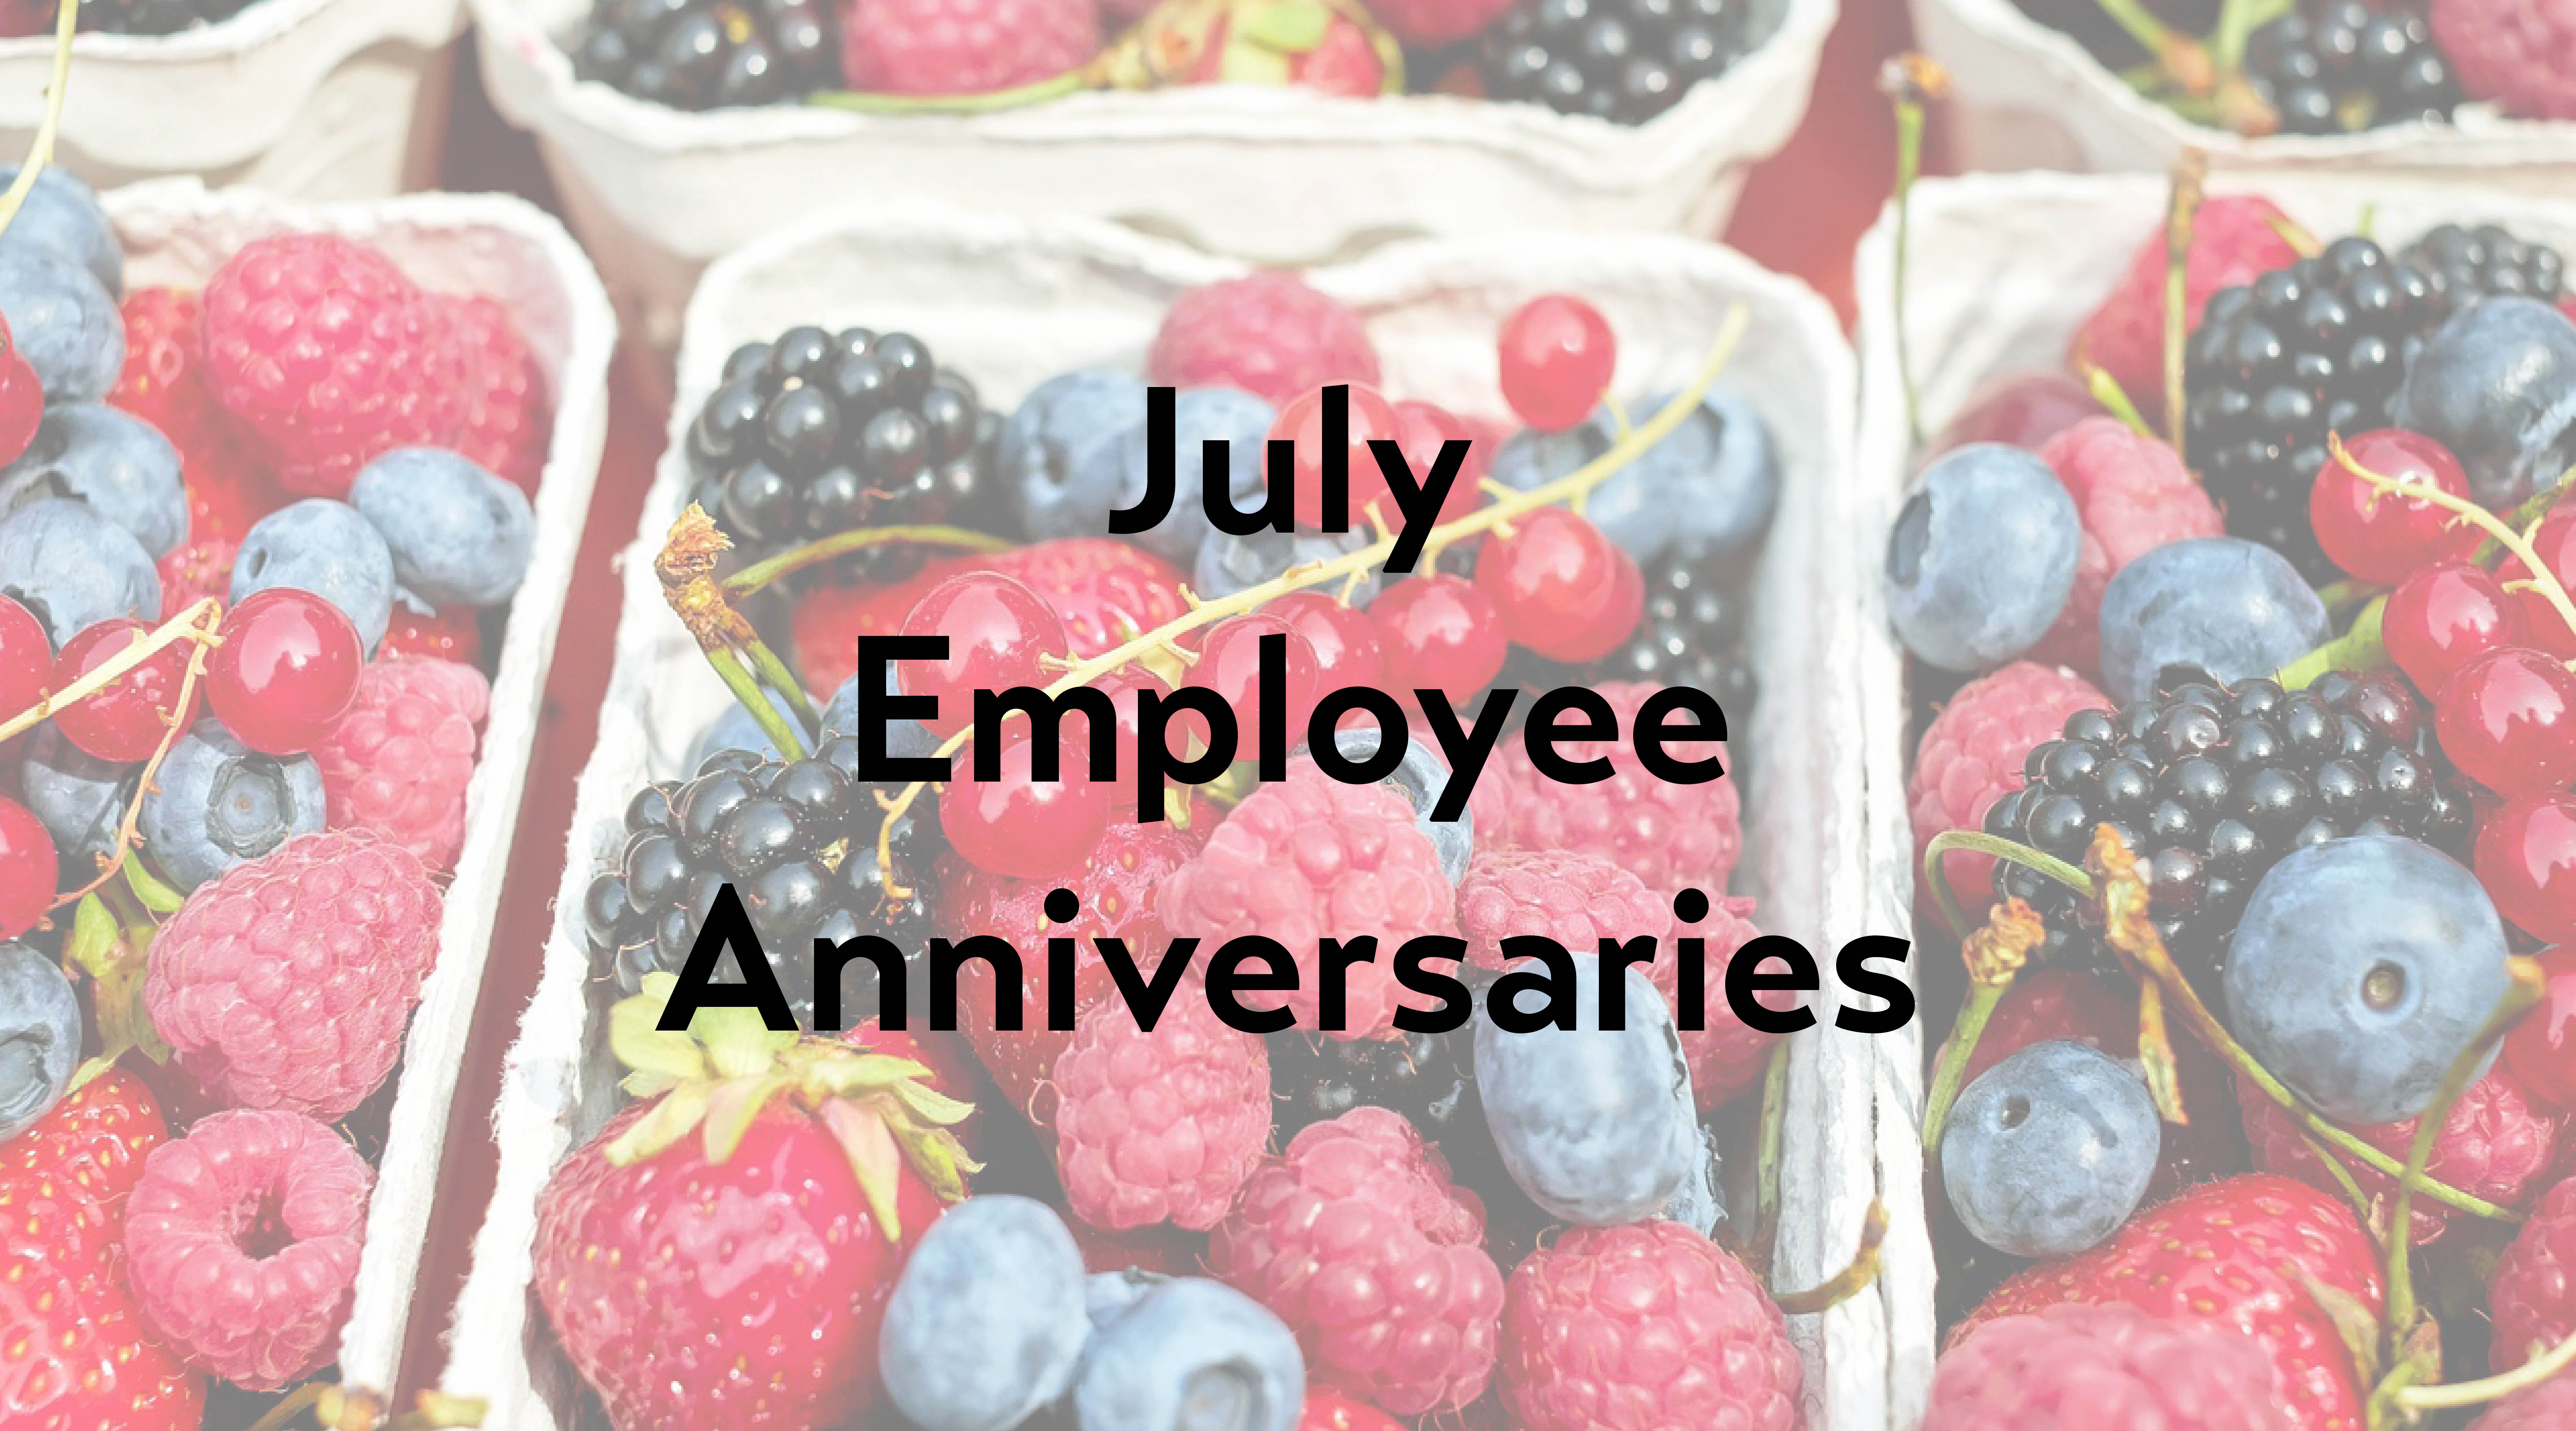 July Employee Anniversaries on berries background